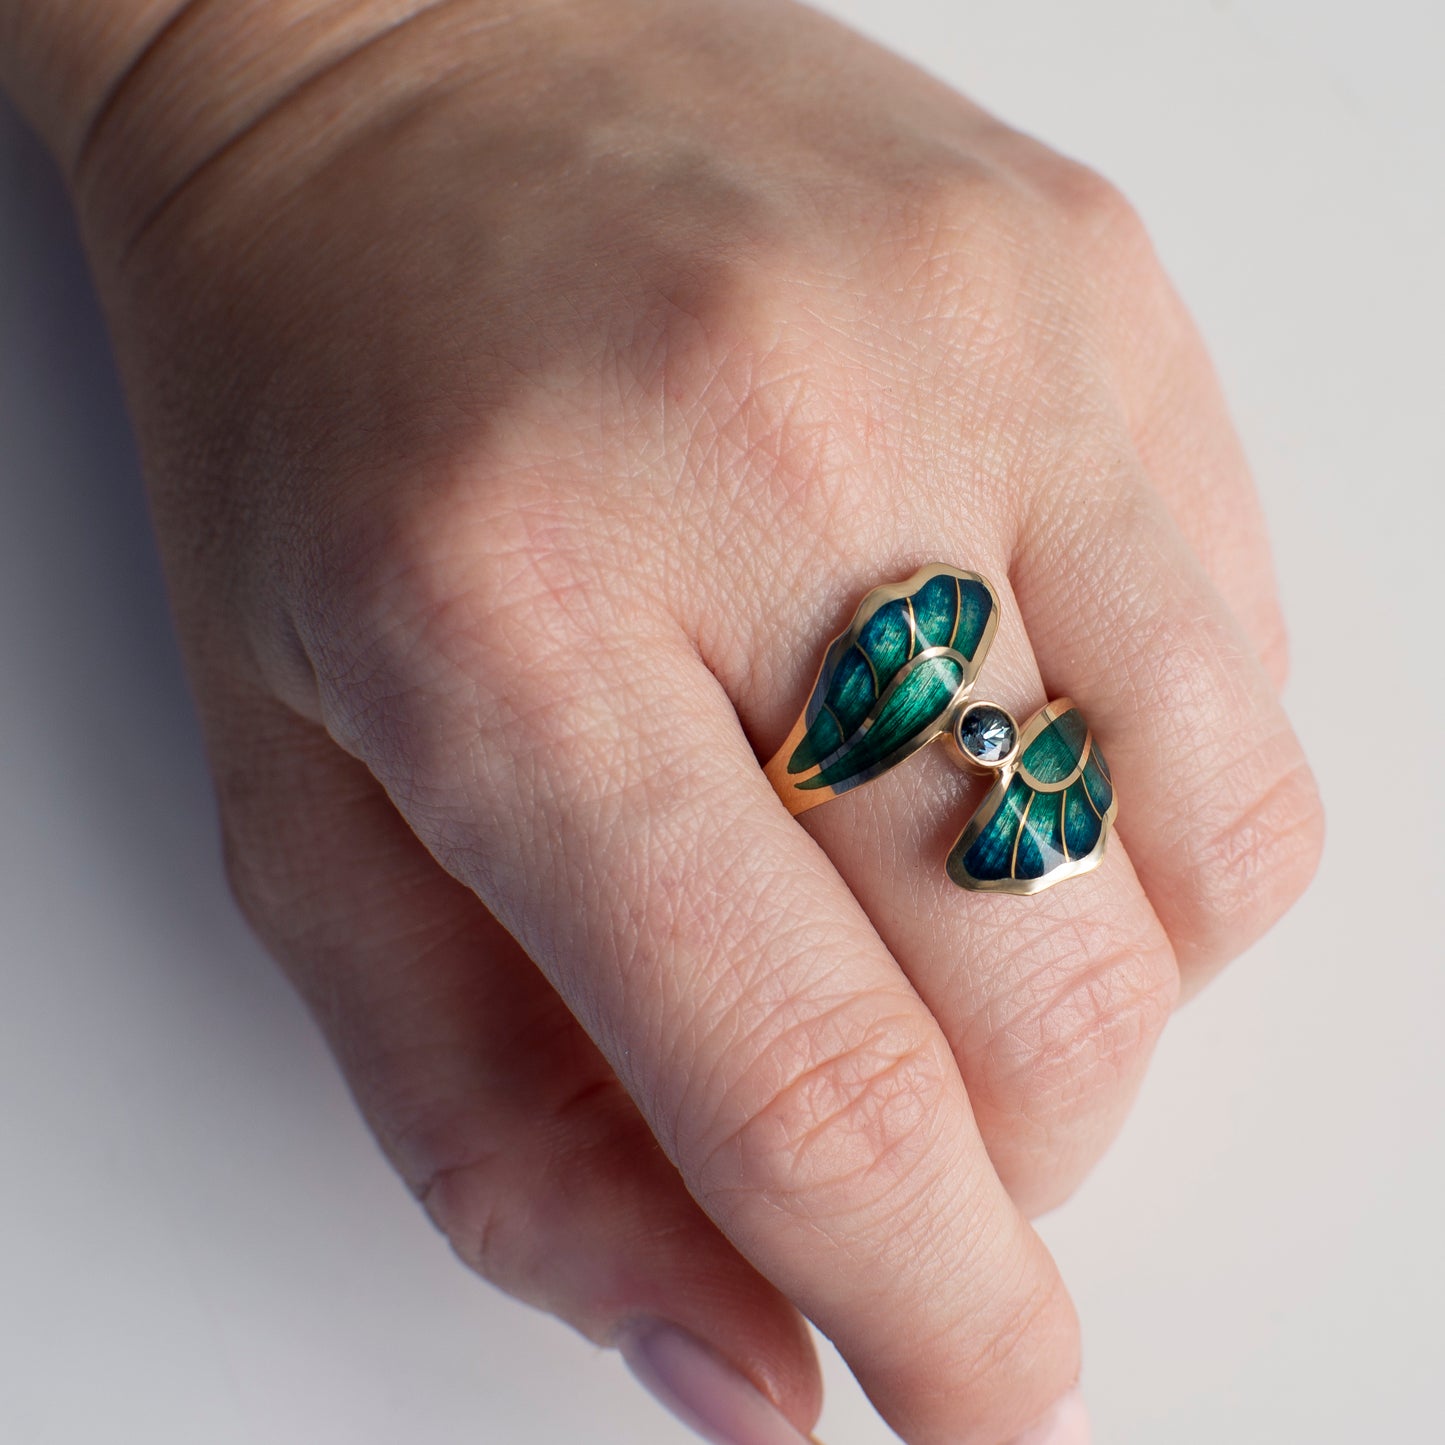 18K Gold Enamel Ring With Greenish-Blue Sapphire Gemstone